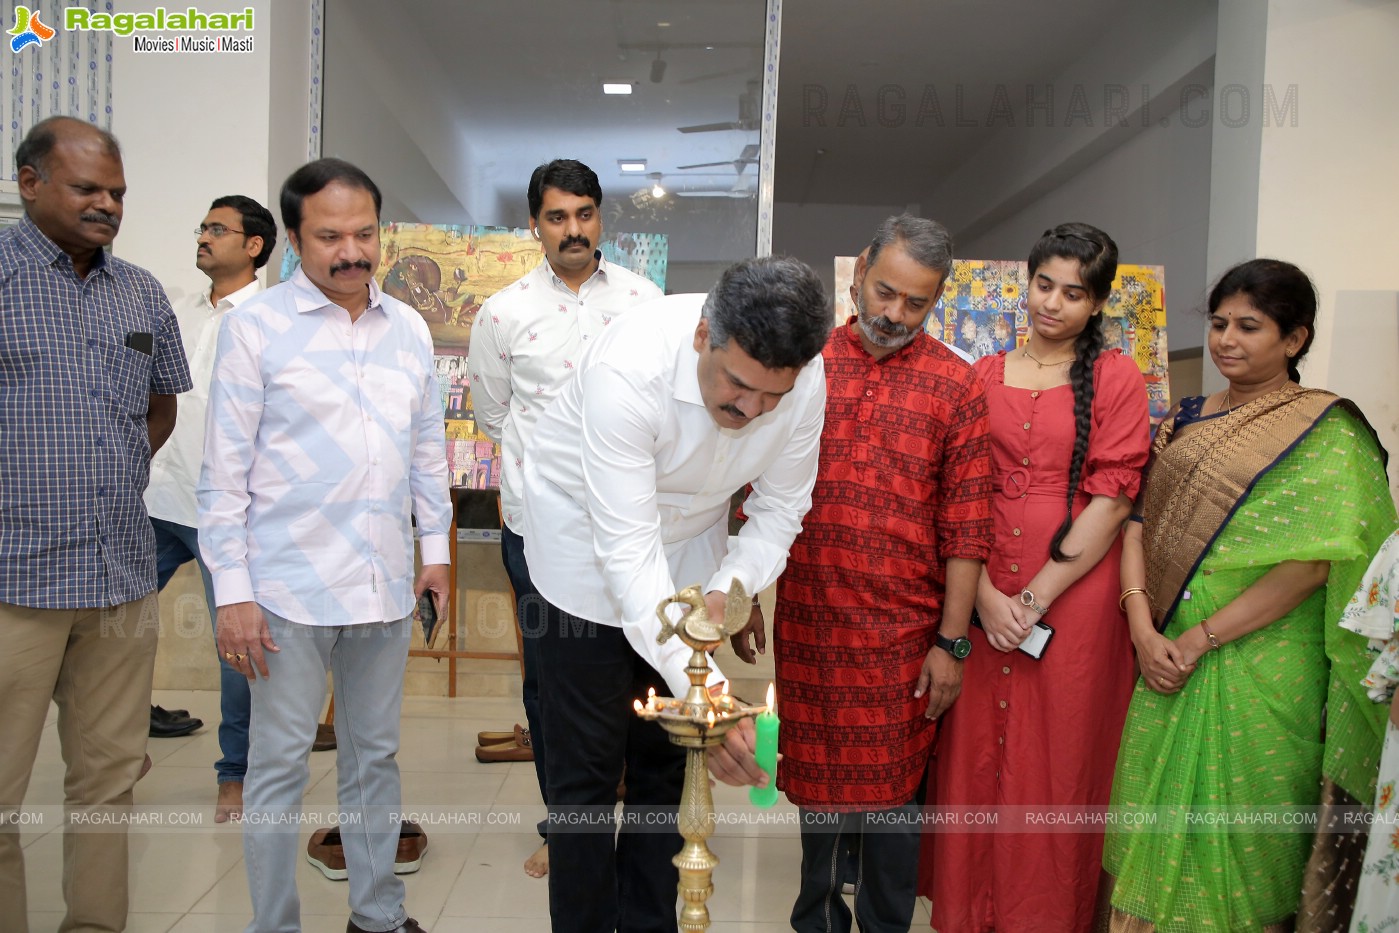 Art Exhibition 'Mytholok' at State Art Gallery, Hyderabad